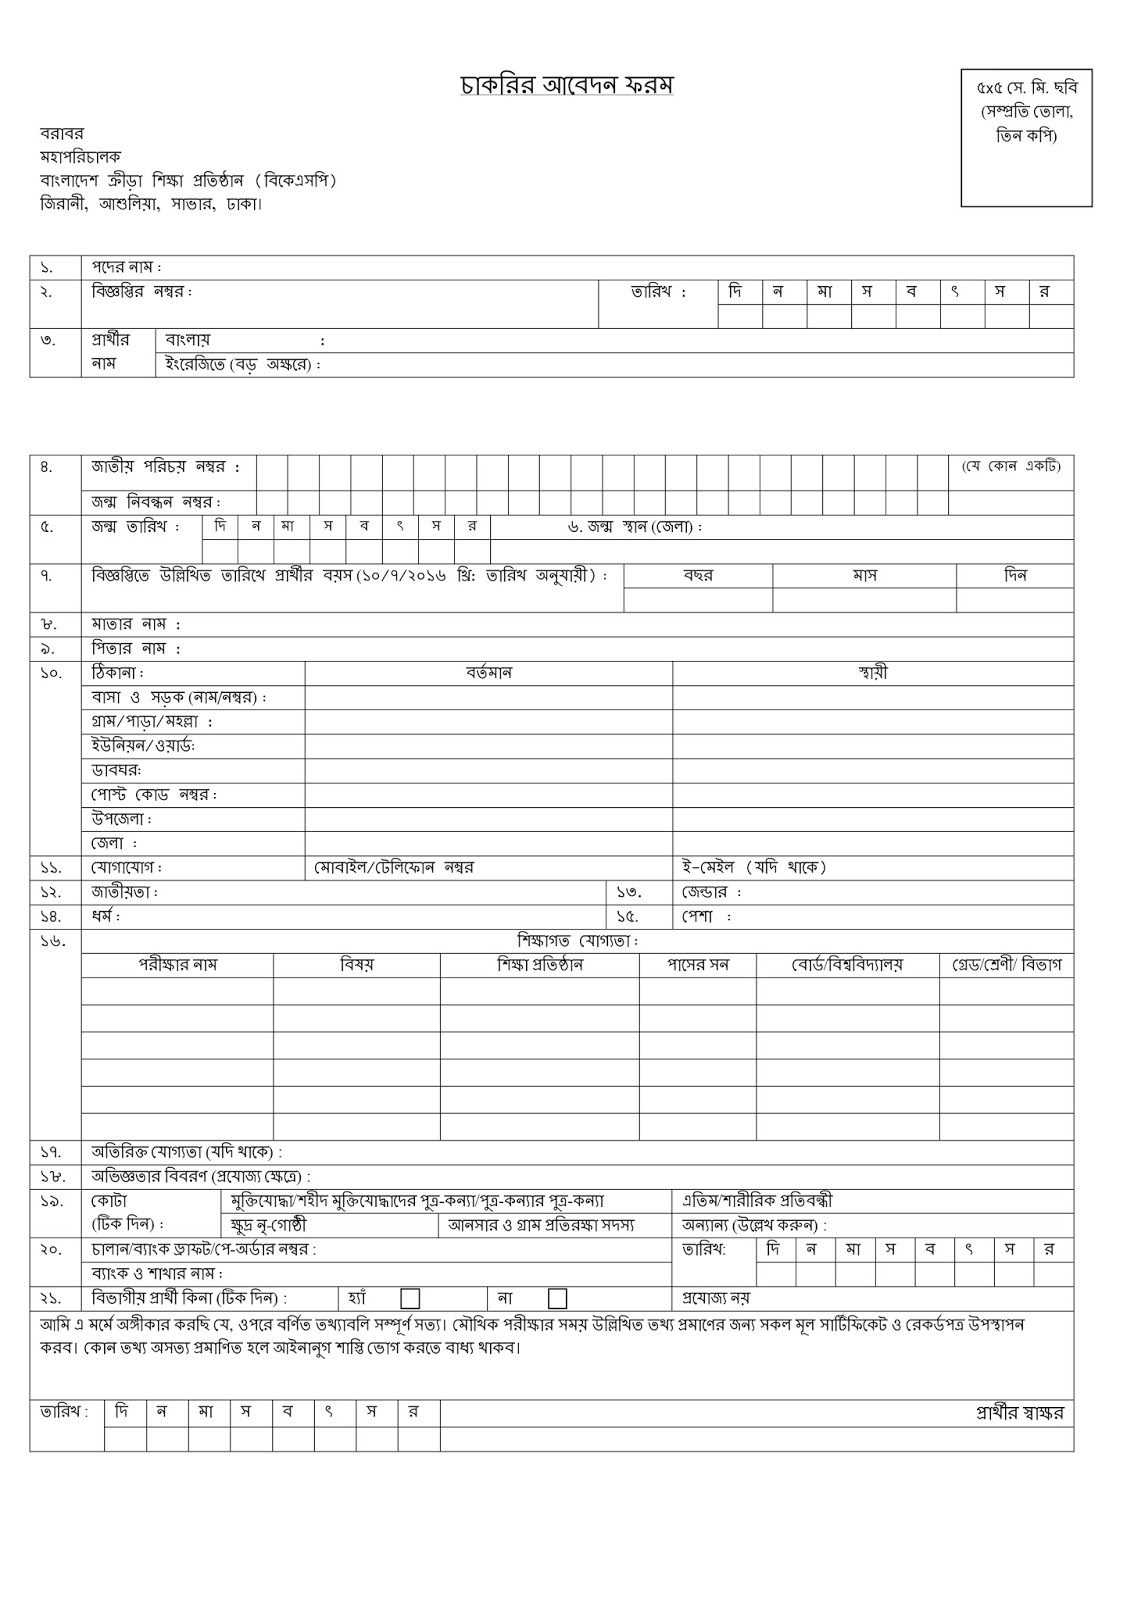 Bangladesh Krira Shikkha Protisthan (BKSP) Coach Recruitment Application Form